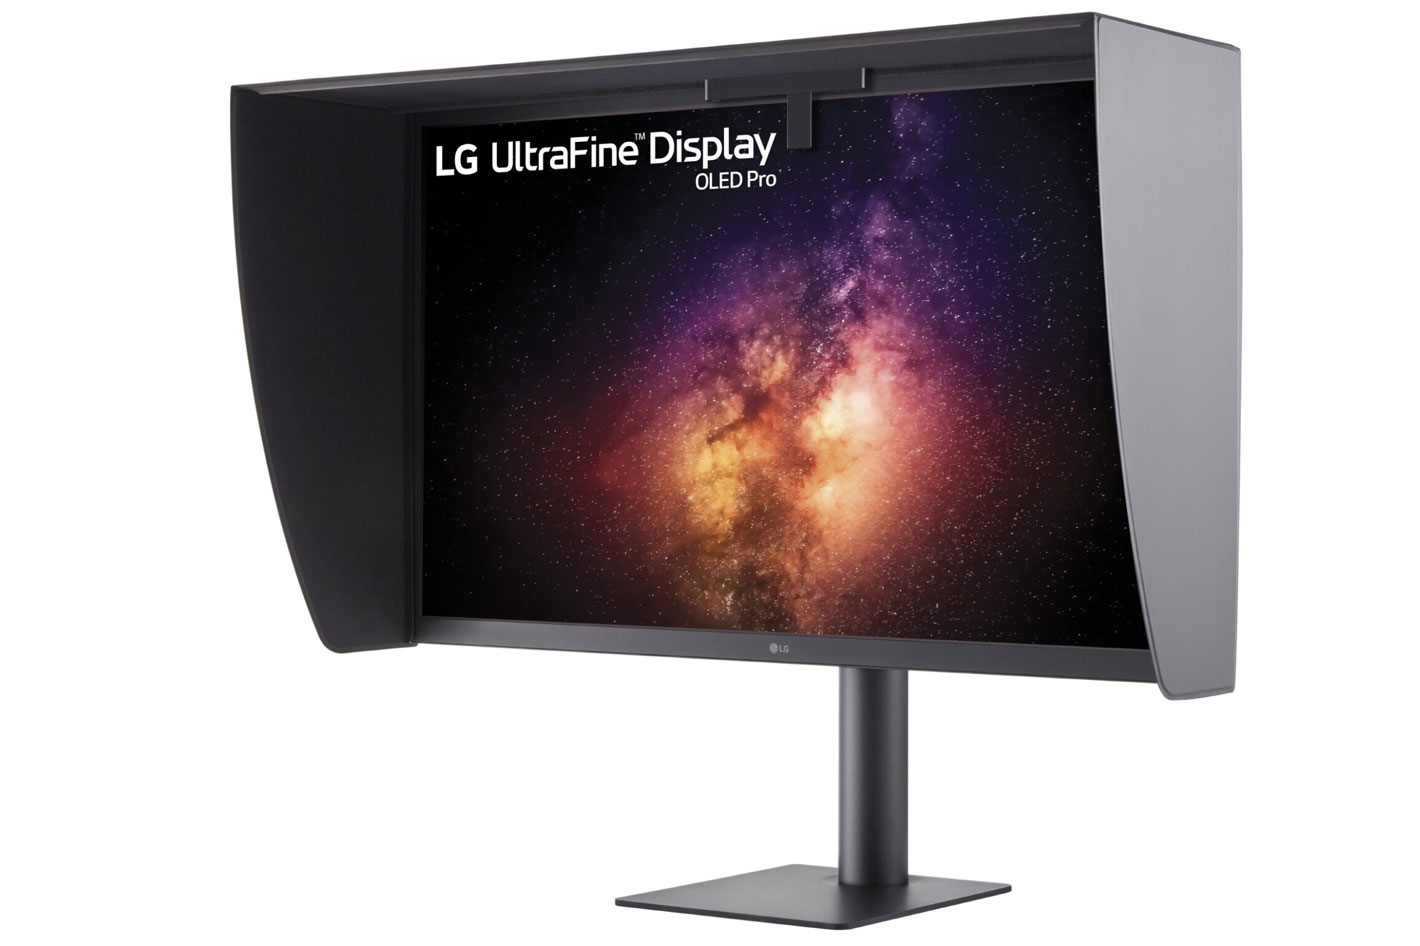 New LG UltraFine OLED Pro monitors for video editors